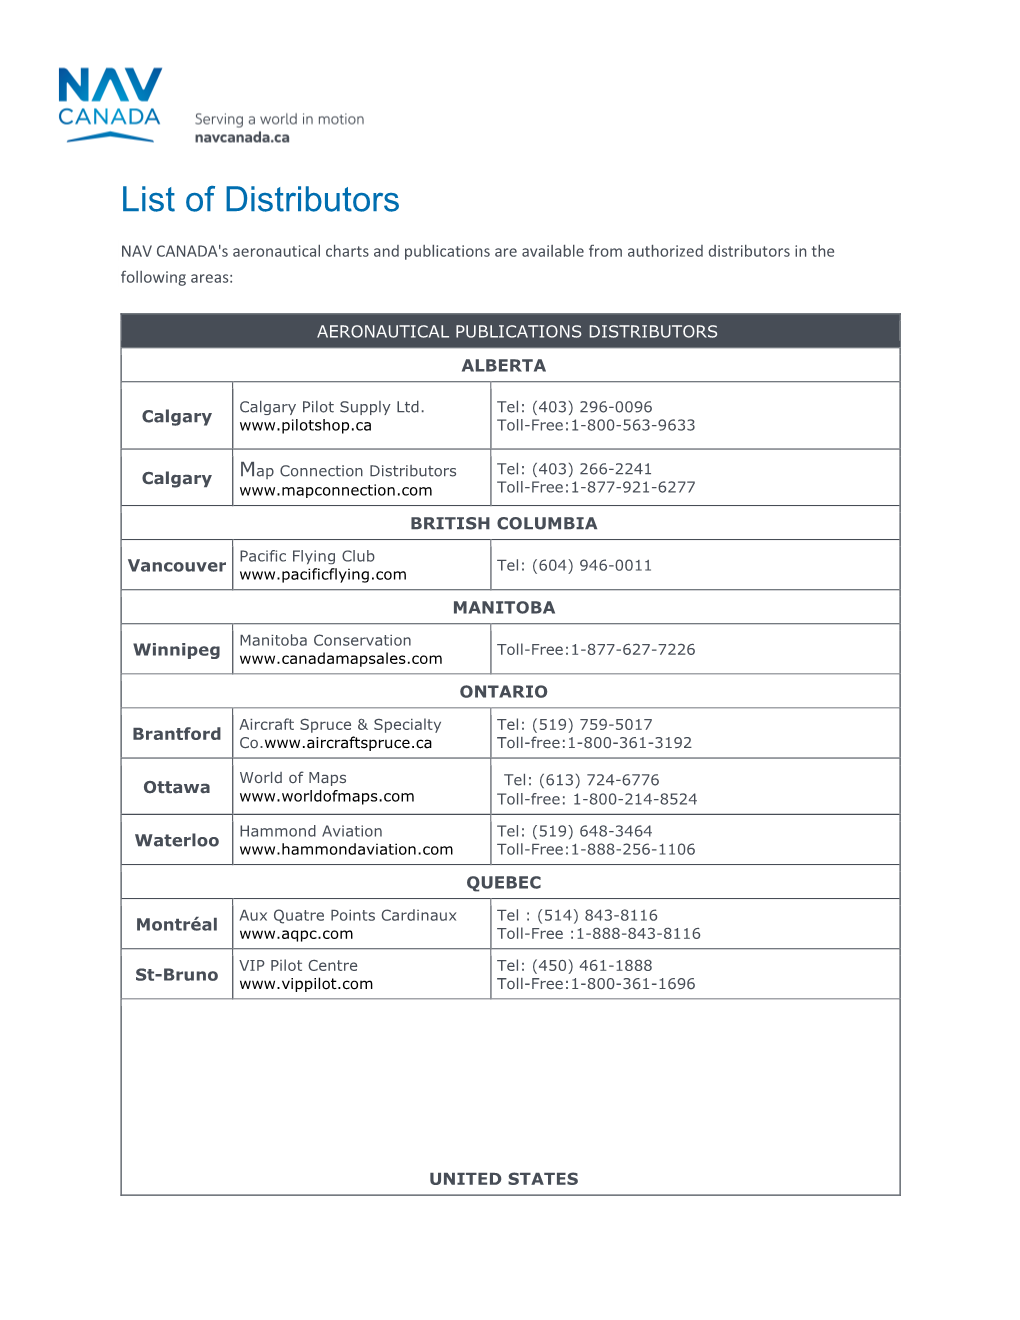 List of Distributors